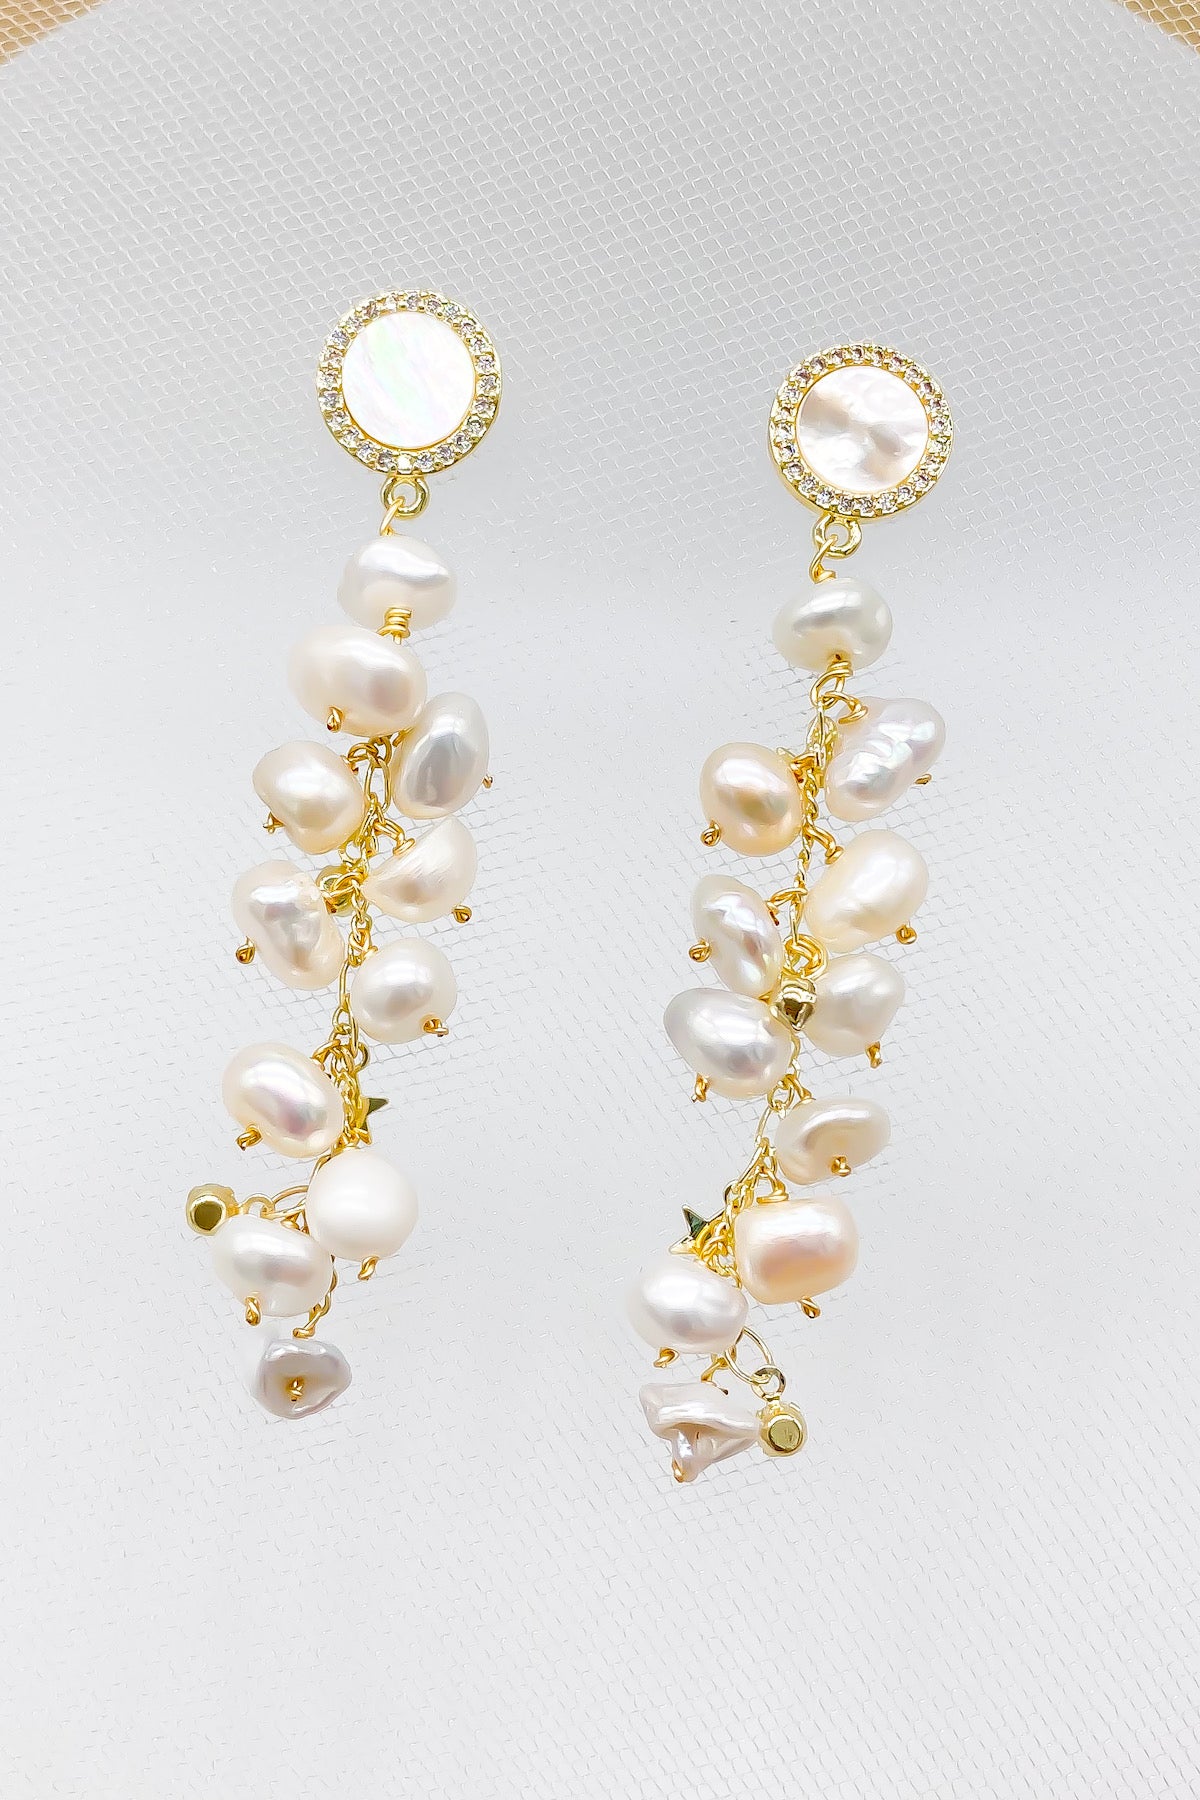 SKYE San Francisco Shop Chic Modern Elegant Classy Women Jewelry French Parisian Minimalist Renee mother of pearl drop earrings 2